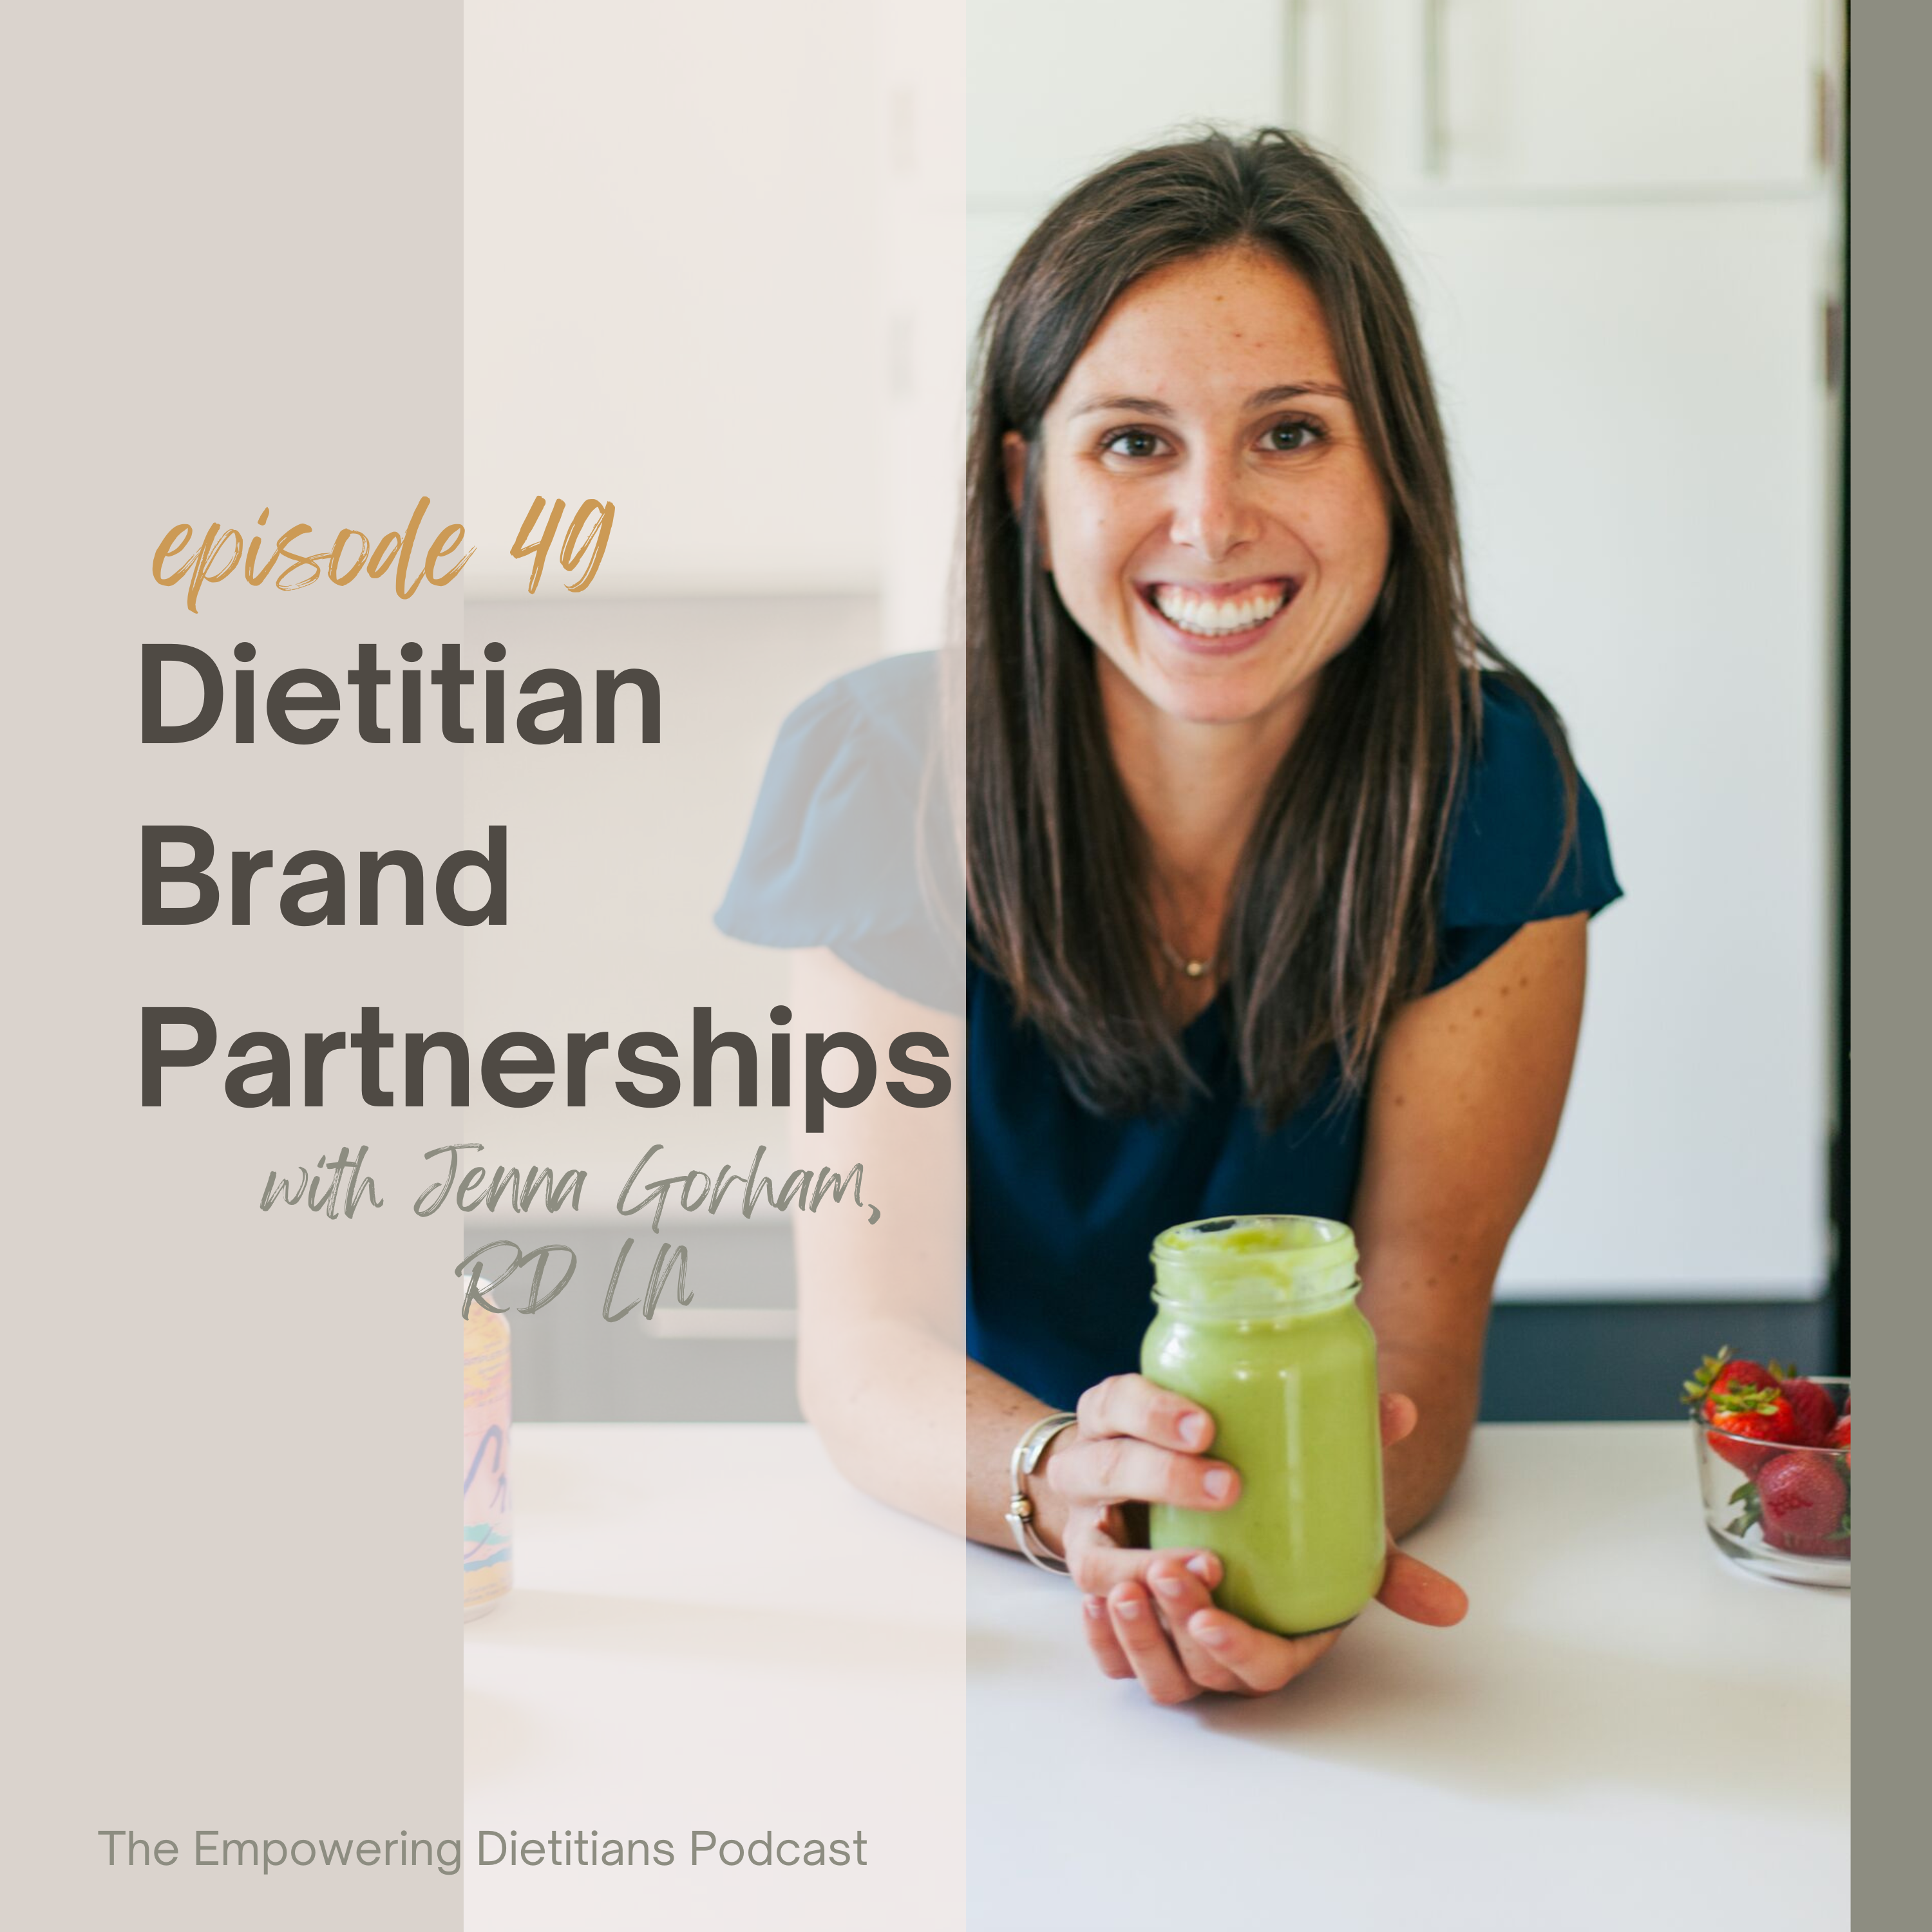 dietitian brand partnerships with jenna gorham